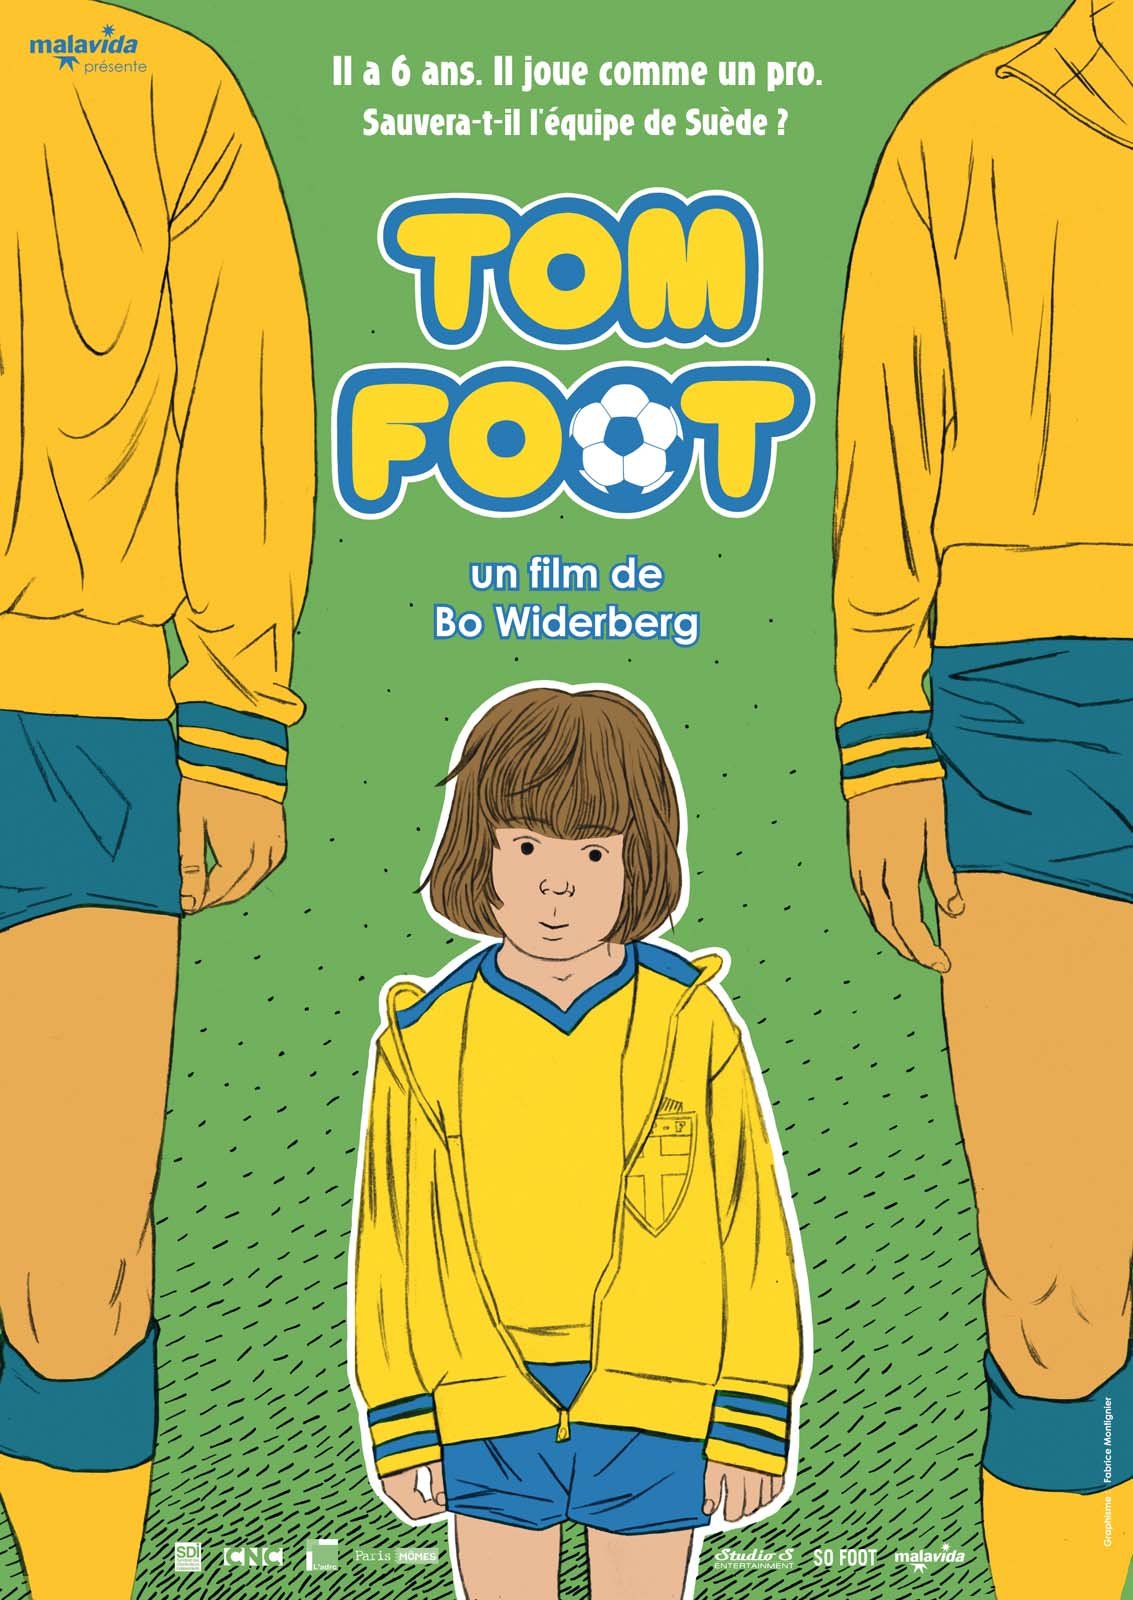 Tom Foot : Affiche